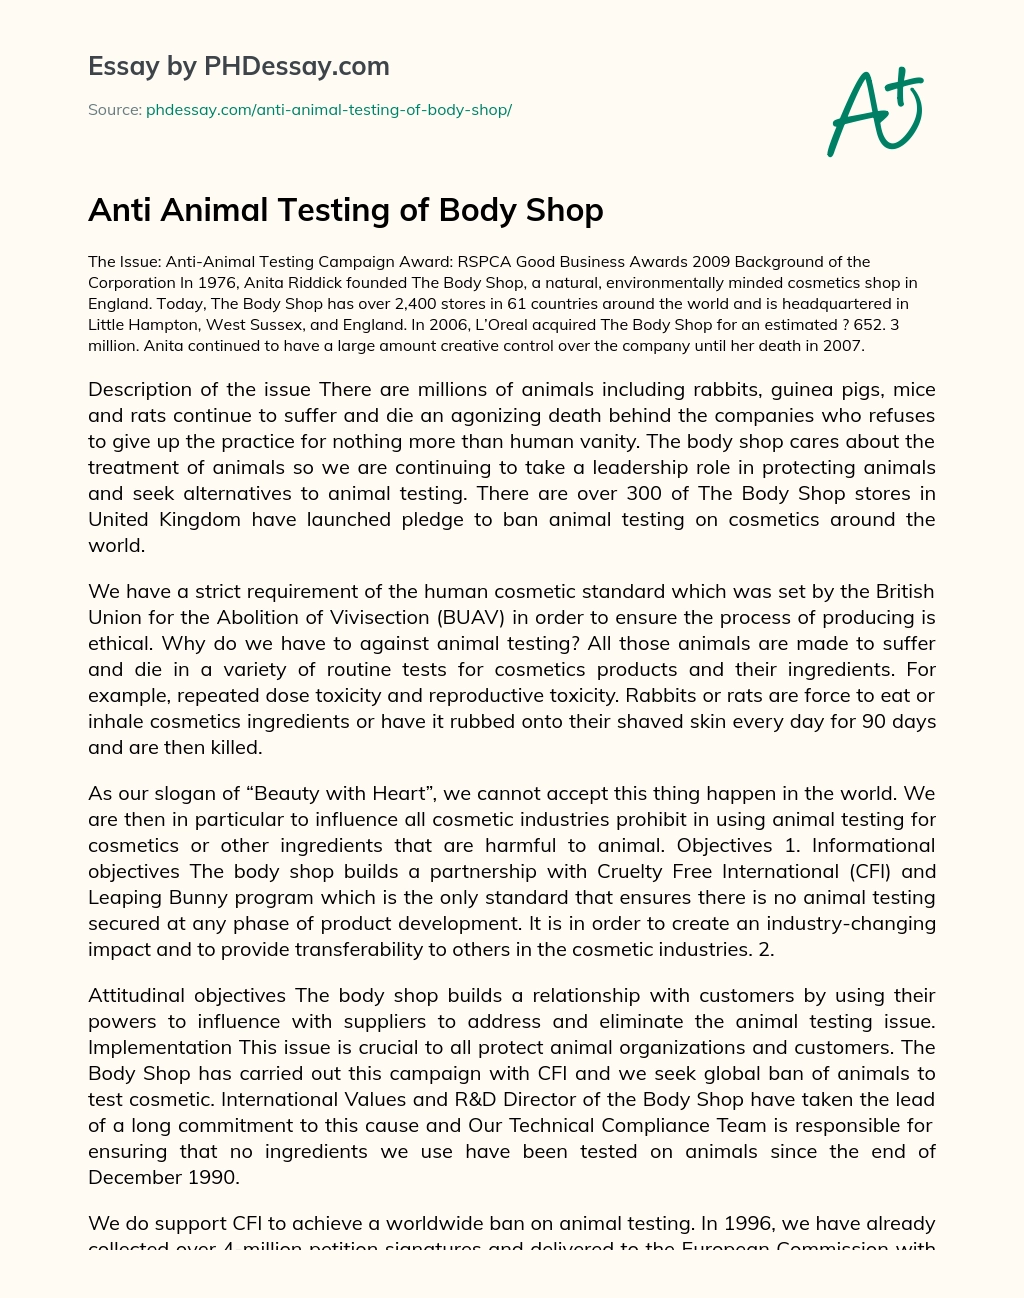 Anti Animal Testing of Body Shop essay